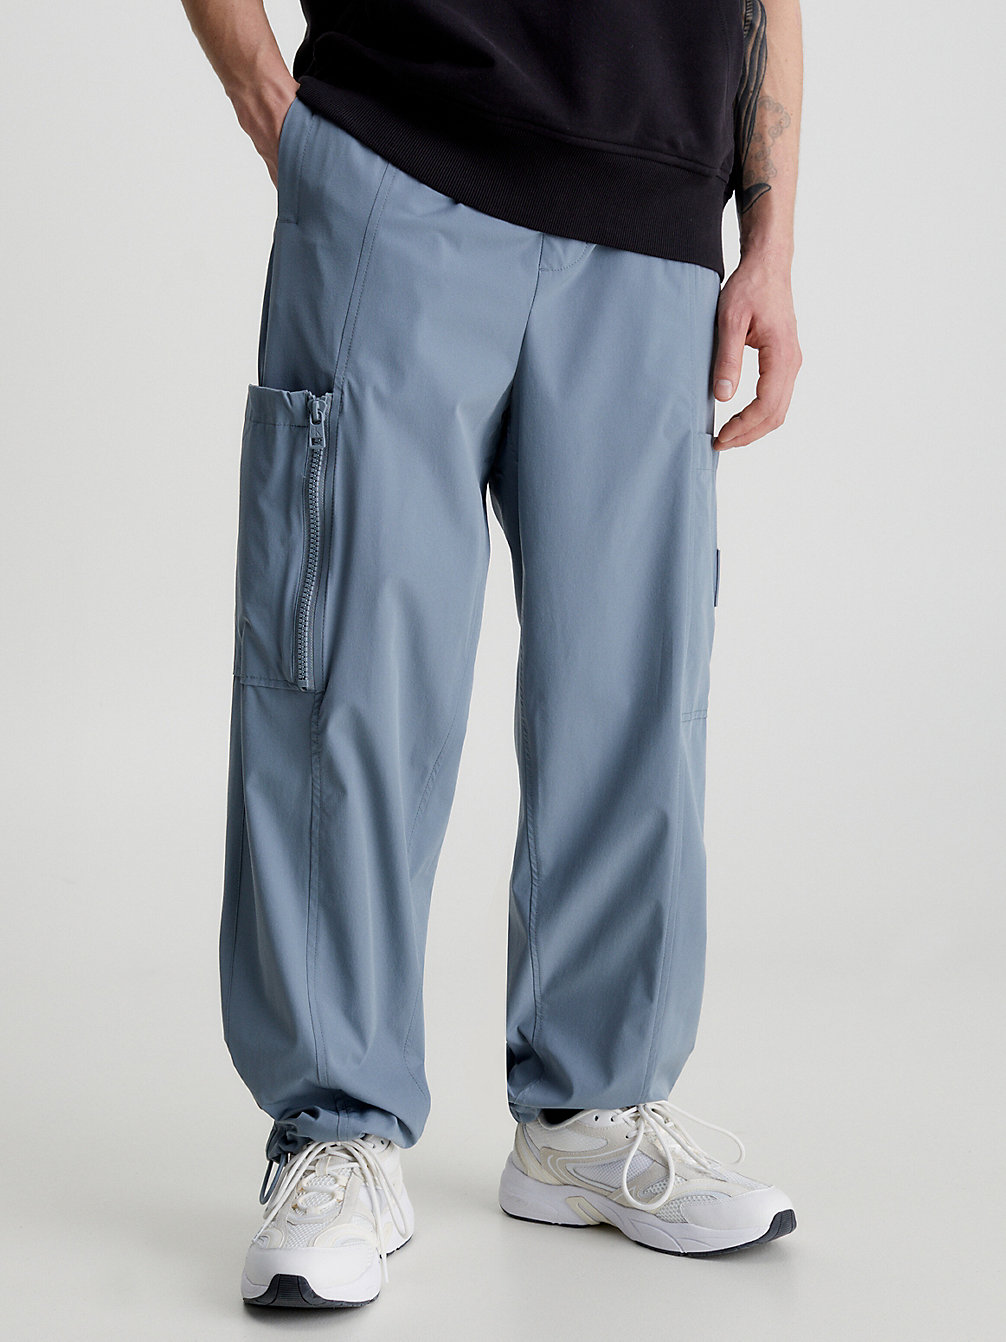 OVERCAST GREY Pantalon Cargo À Jambes Larges En Tissu Recyclé undefined hommes Calvin Klein